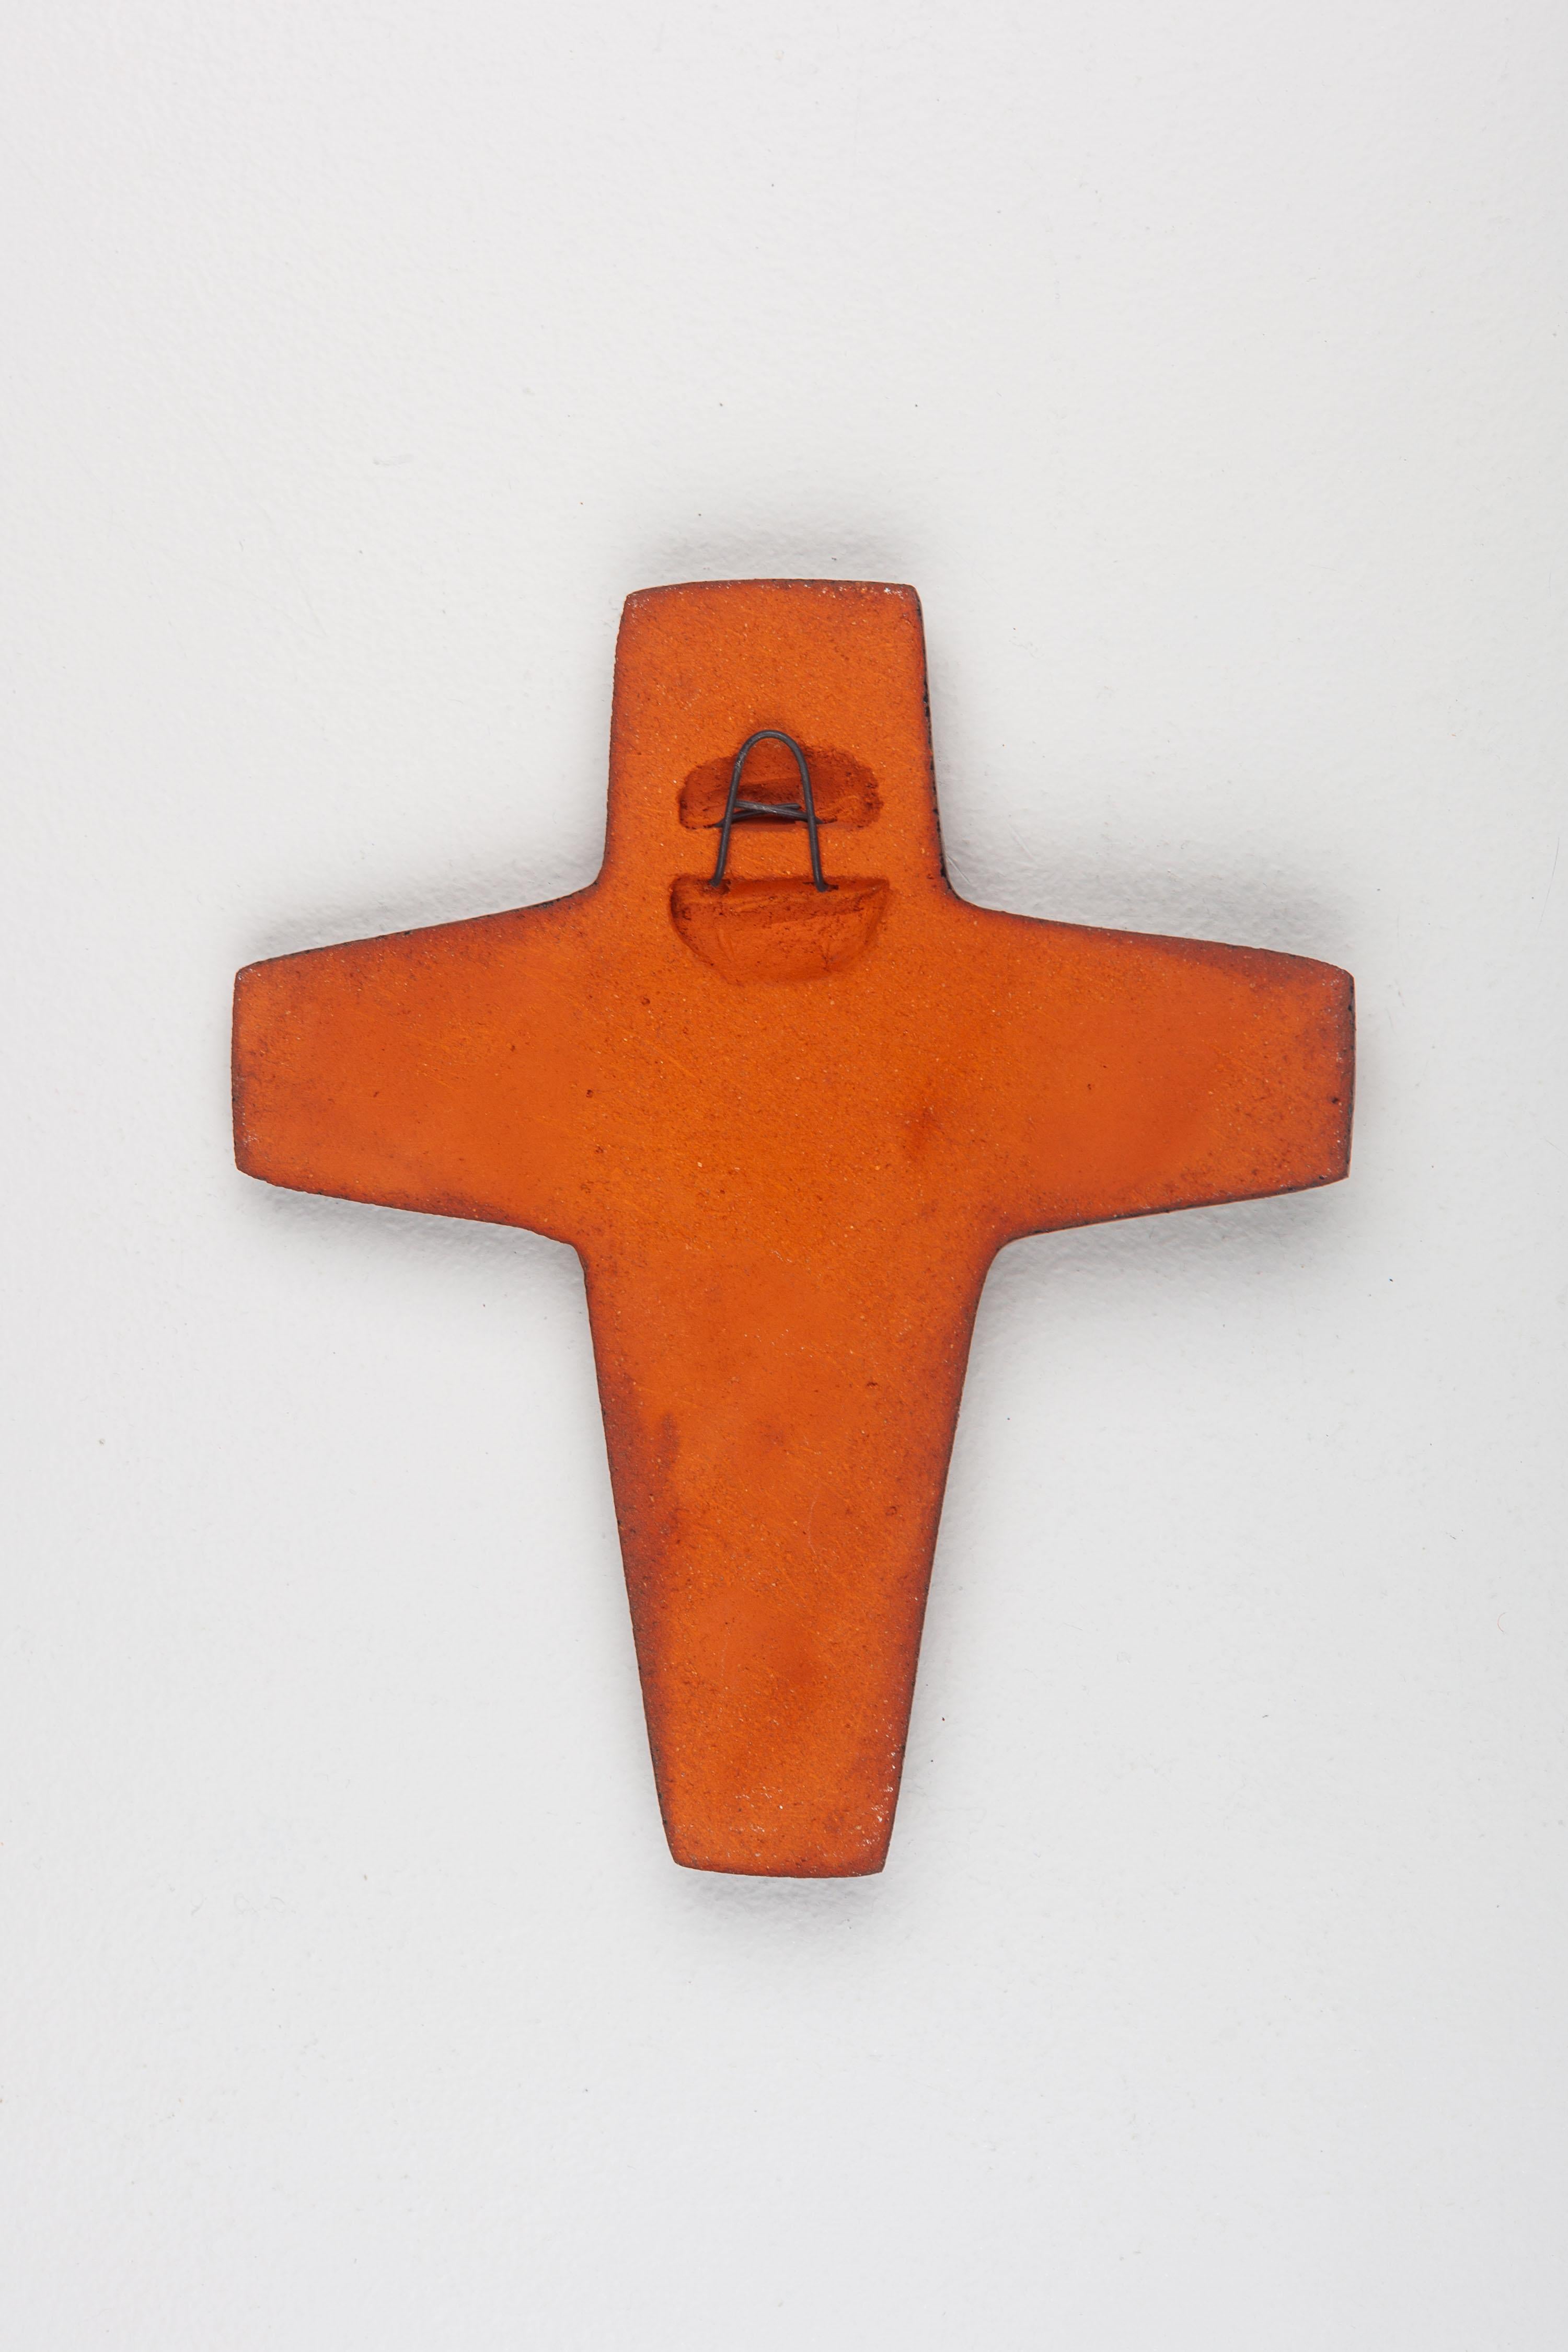 Midcentury European Glossy Ceramic Cross - Otherworldly Christ Figure For Sale 2